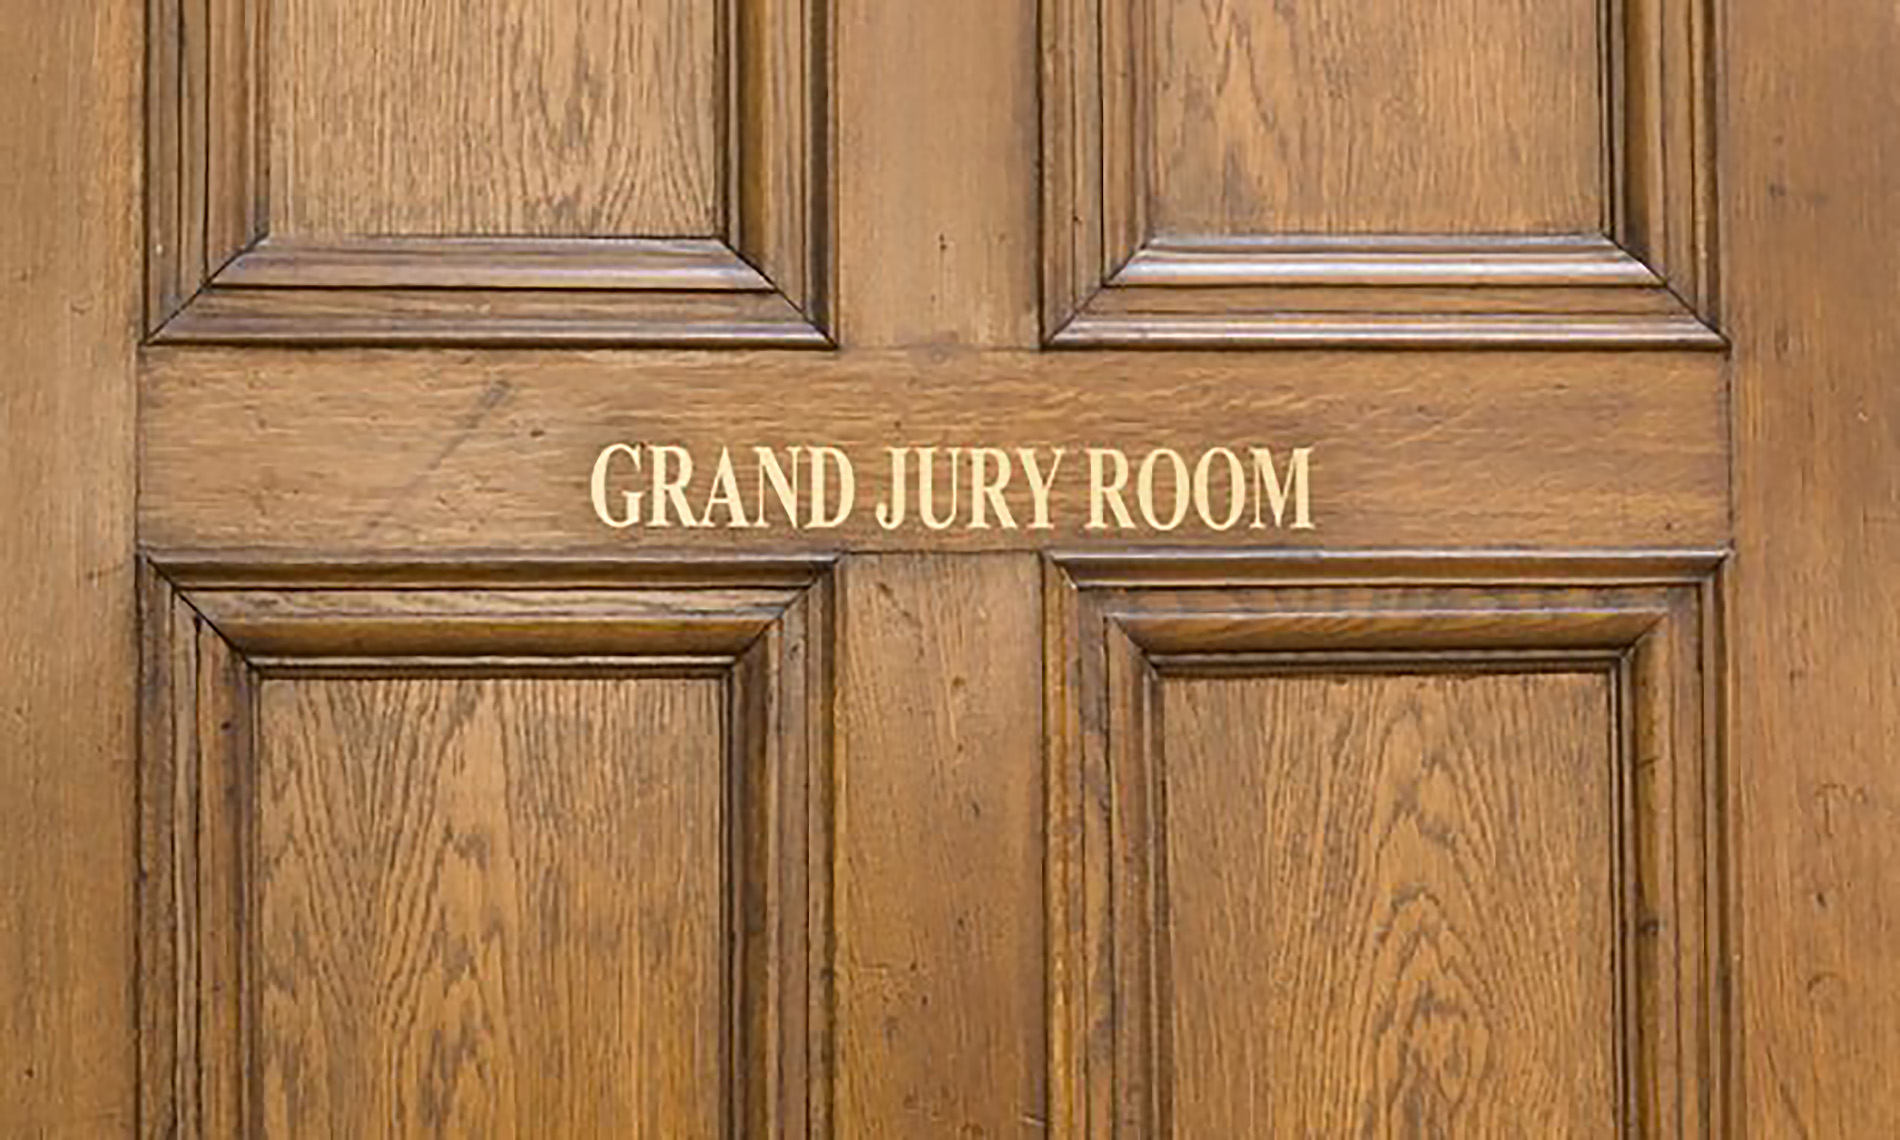 Grand Jury Room Tampa Criminal Defense Law Firm